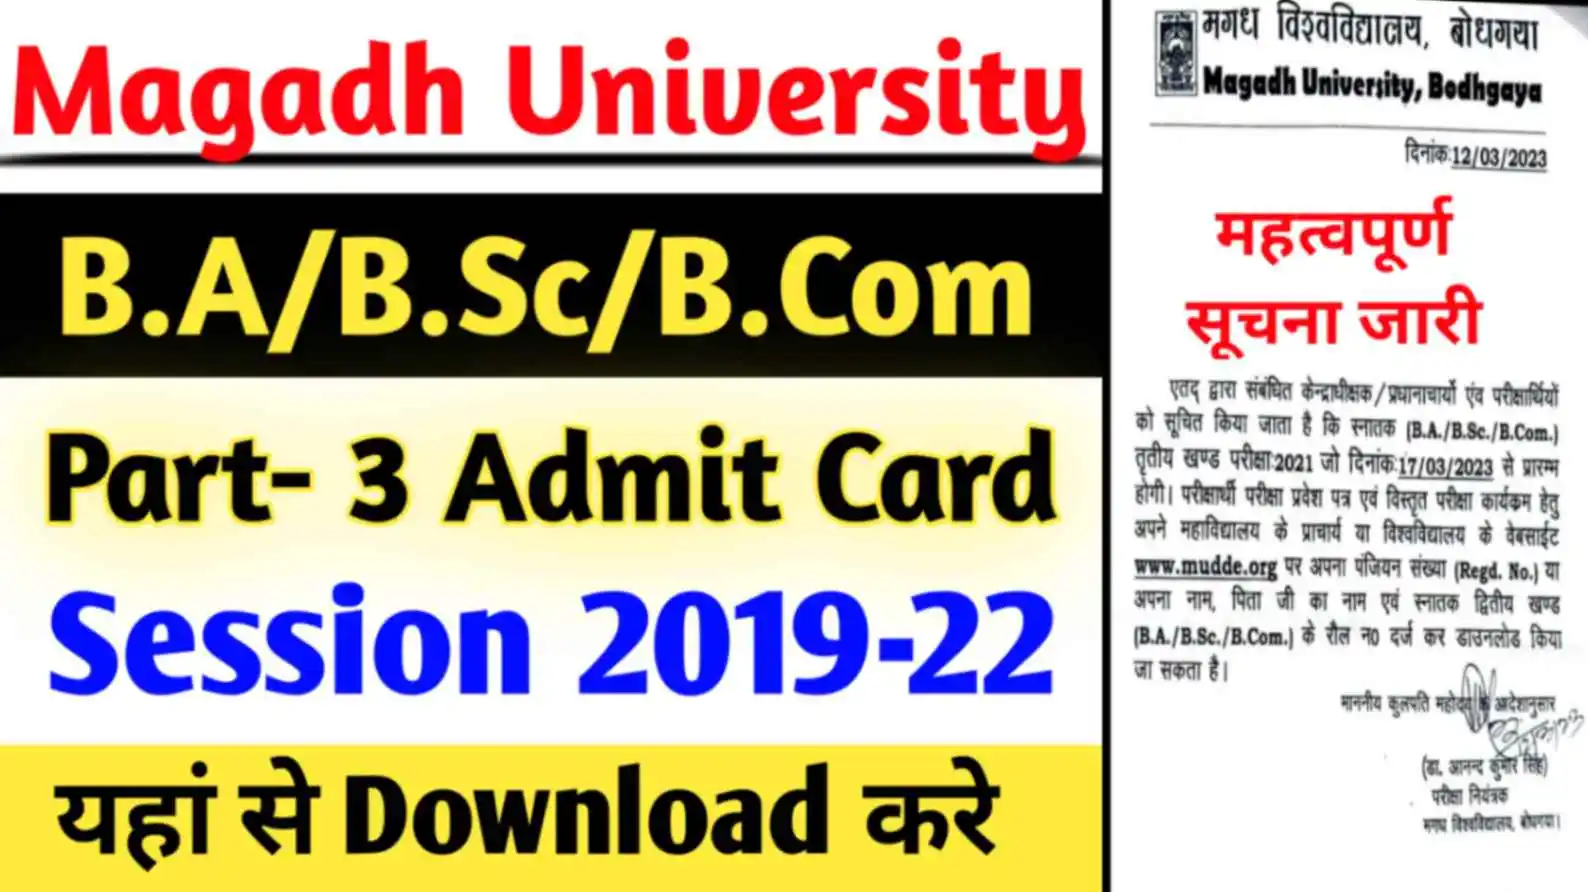 Magadh University Part 3 Admit Card 2019-22 Download